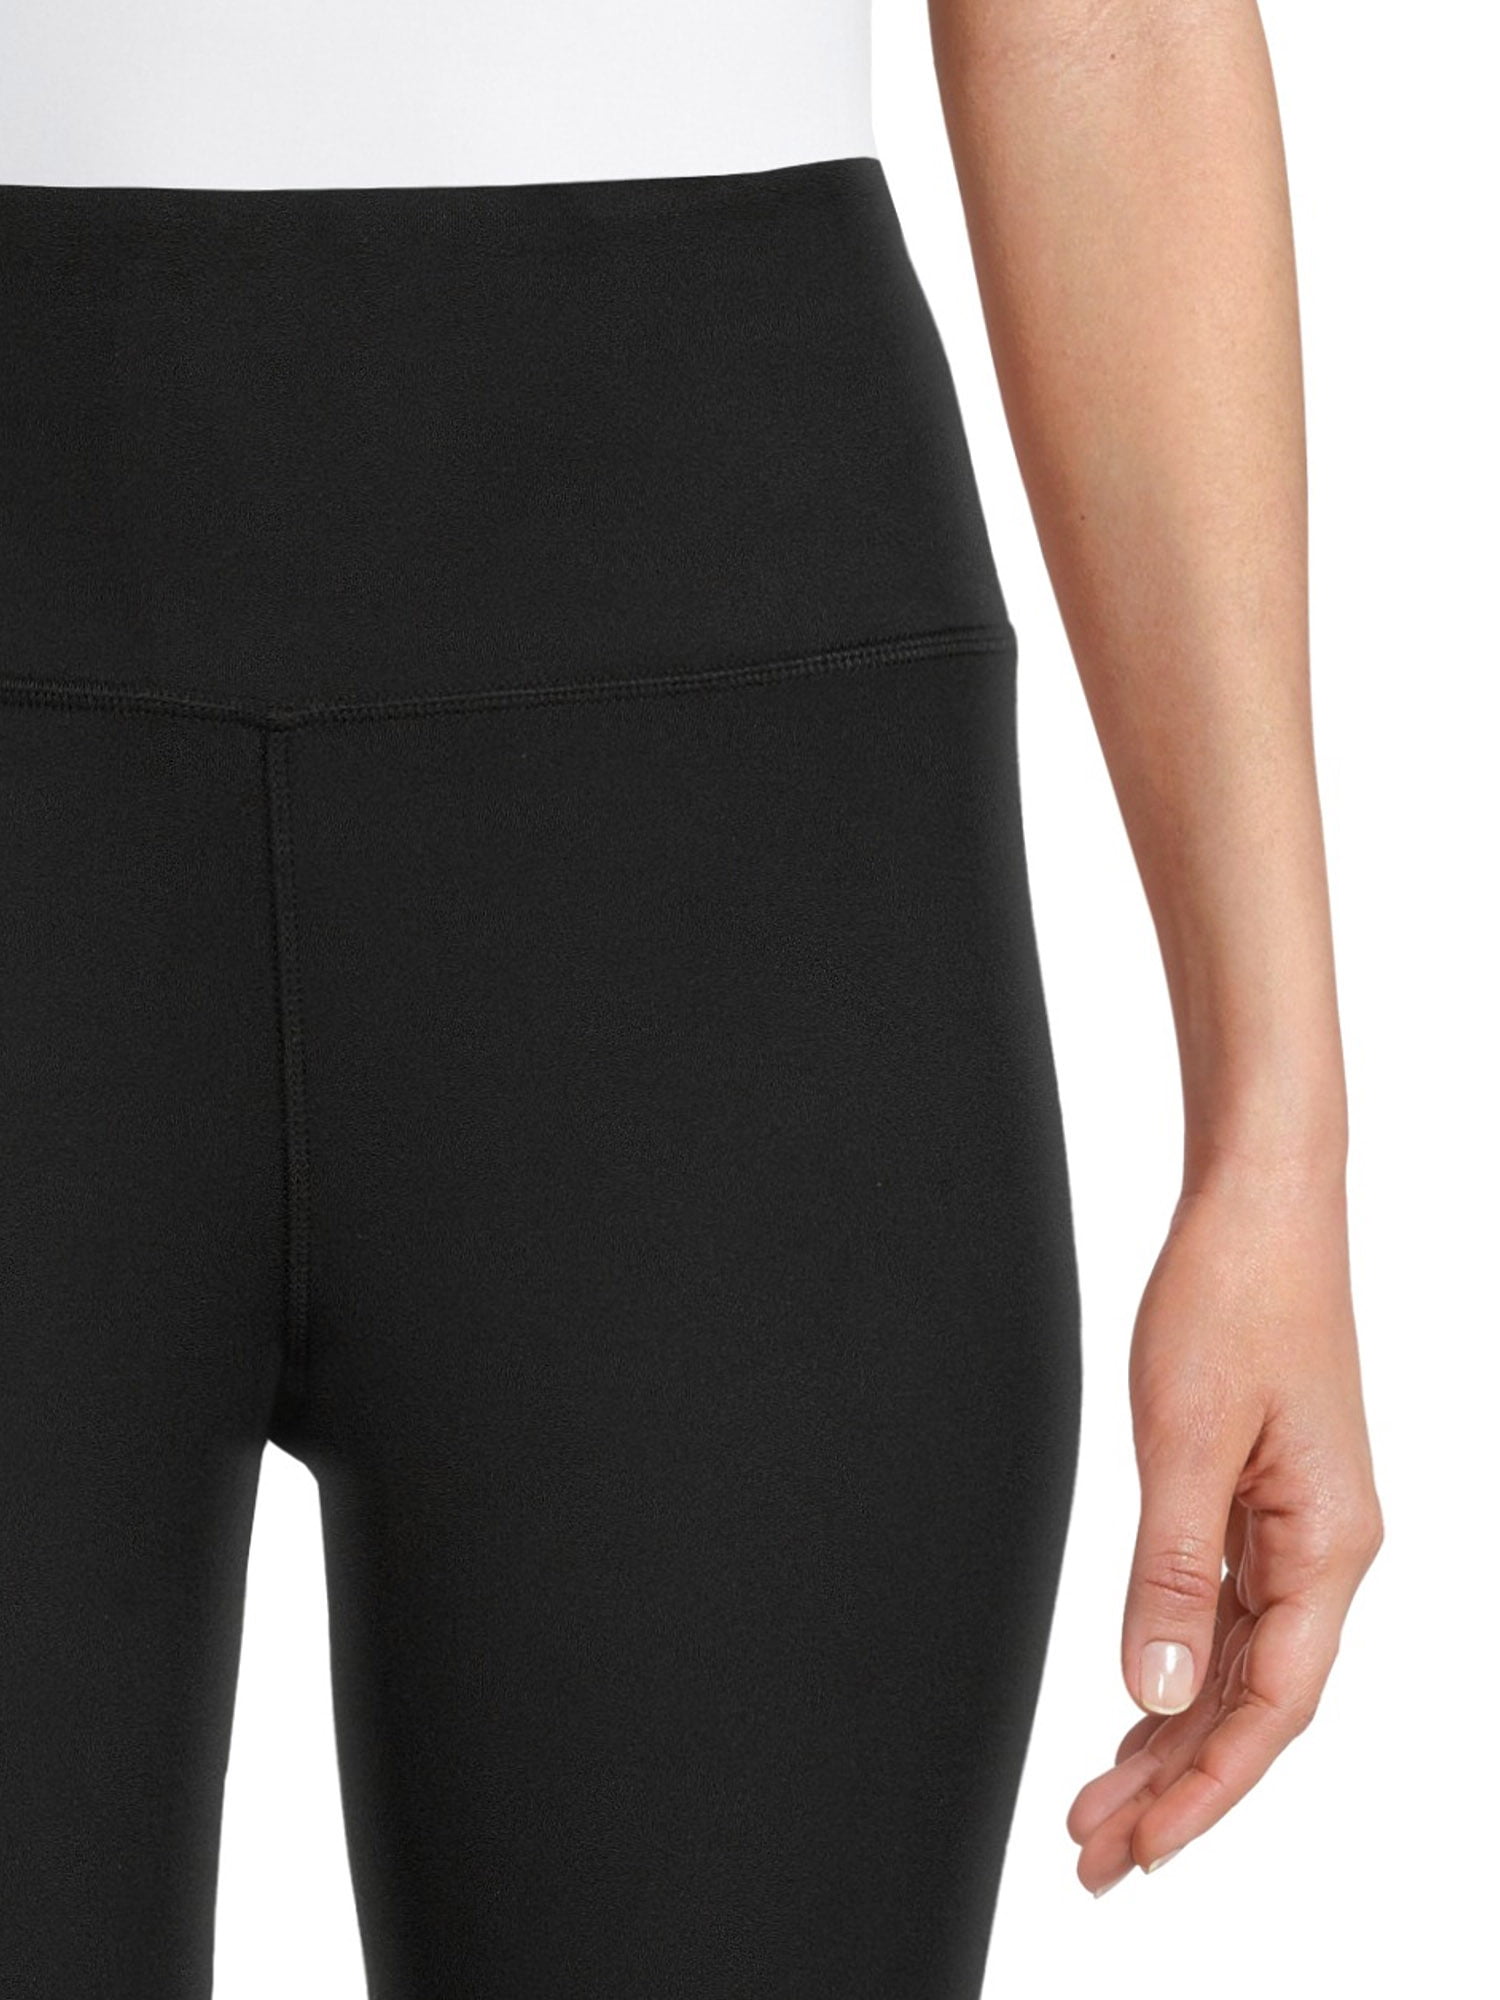 Active Wear  Black Tights, Jockey, Yoga Pant, Small, 83-89cm